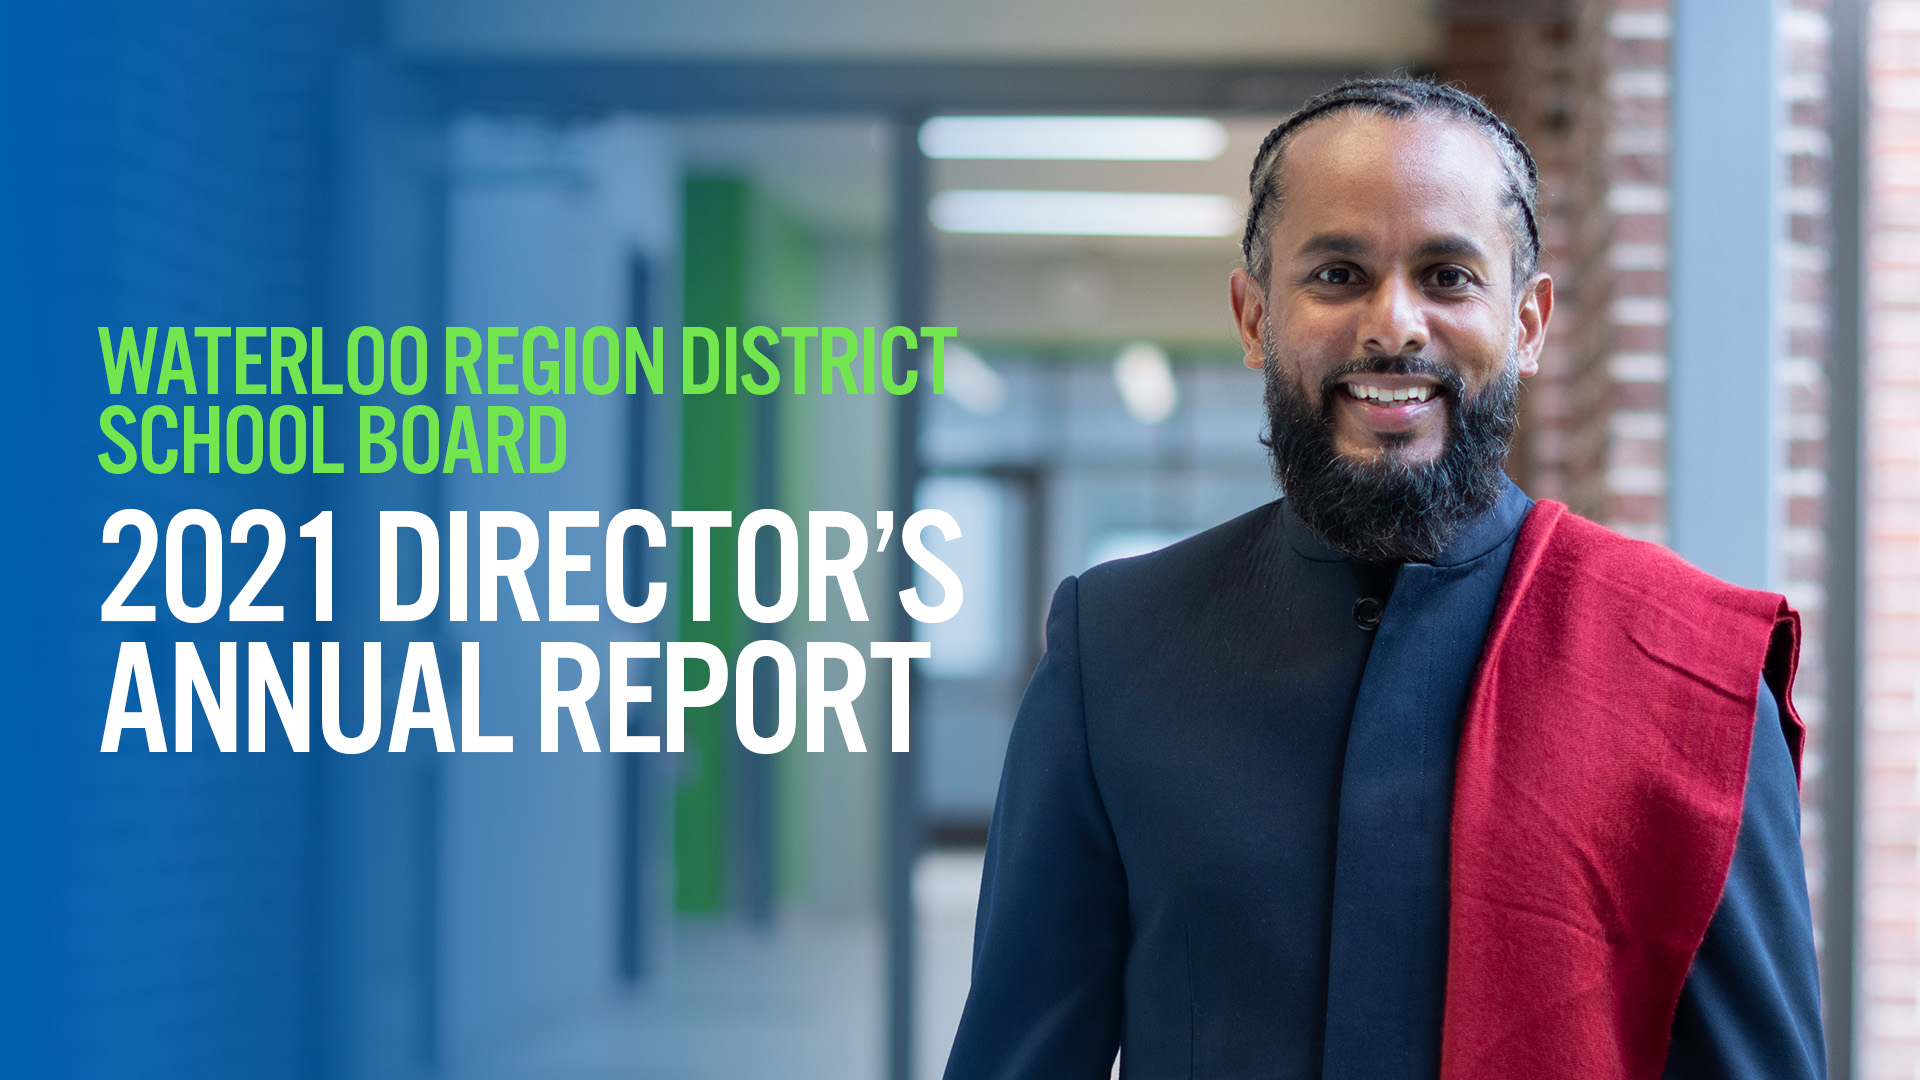 2021 Director's Annual Report